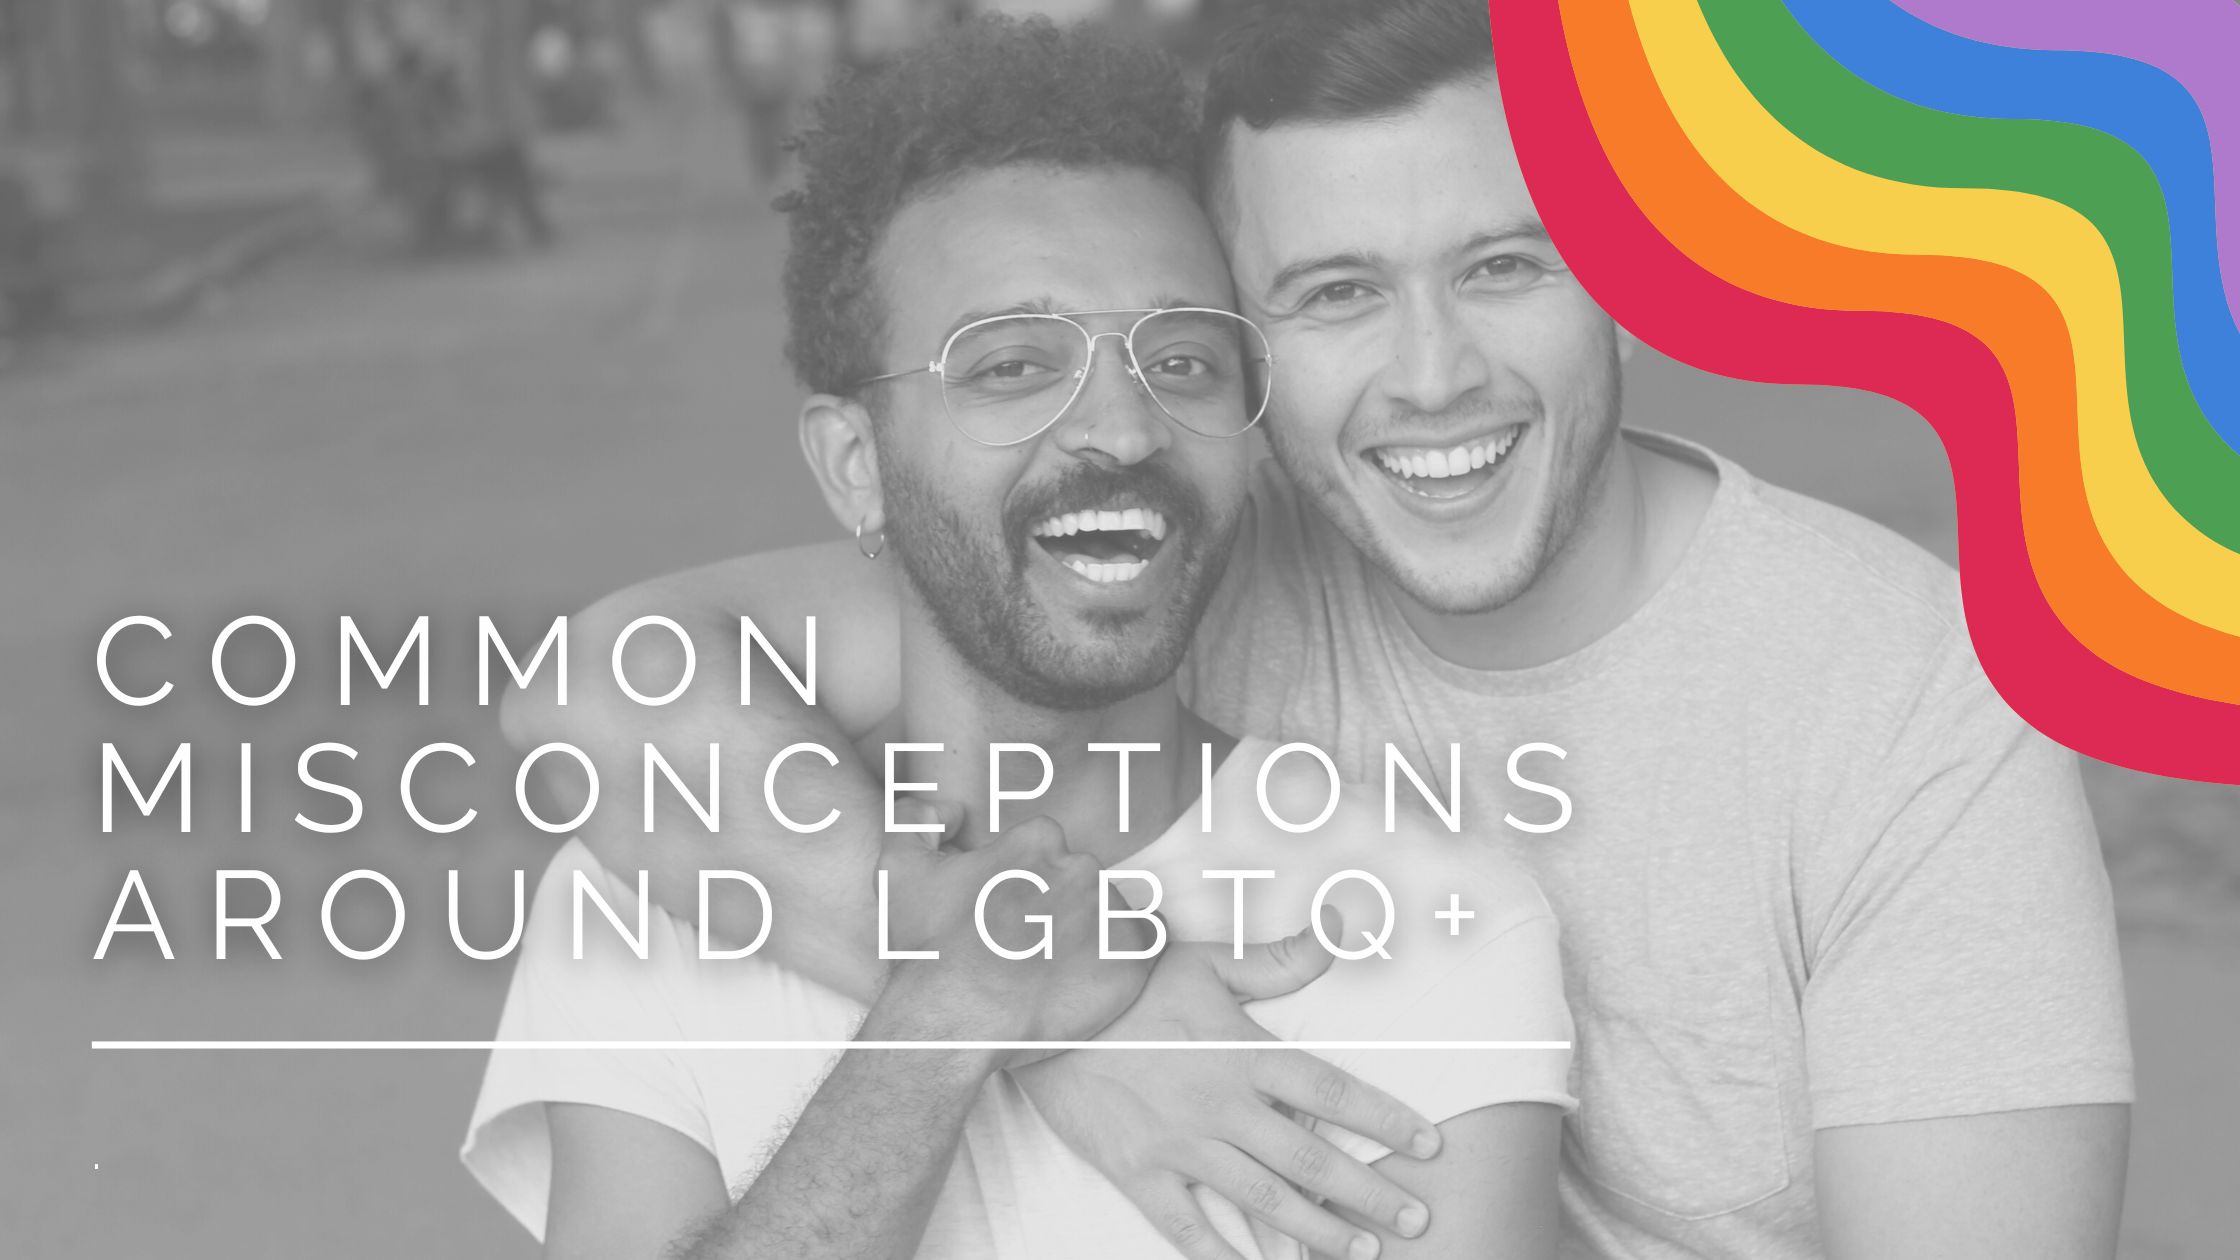 Common misconceptions around LGBTQ+